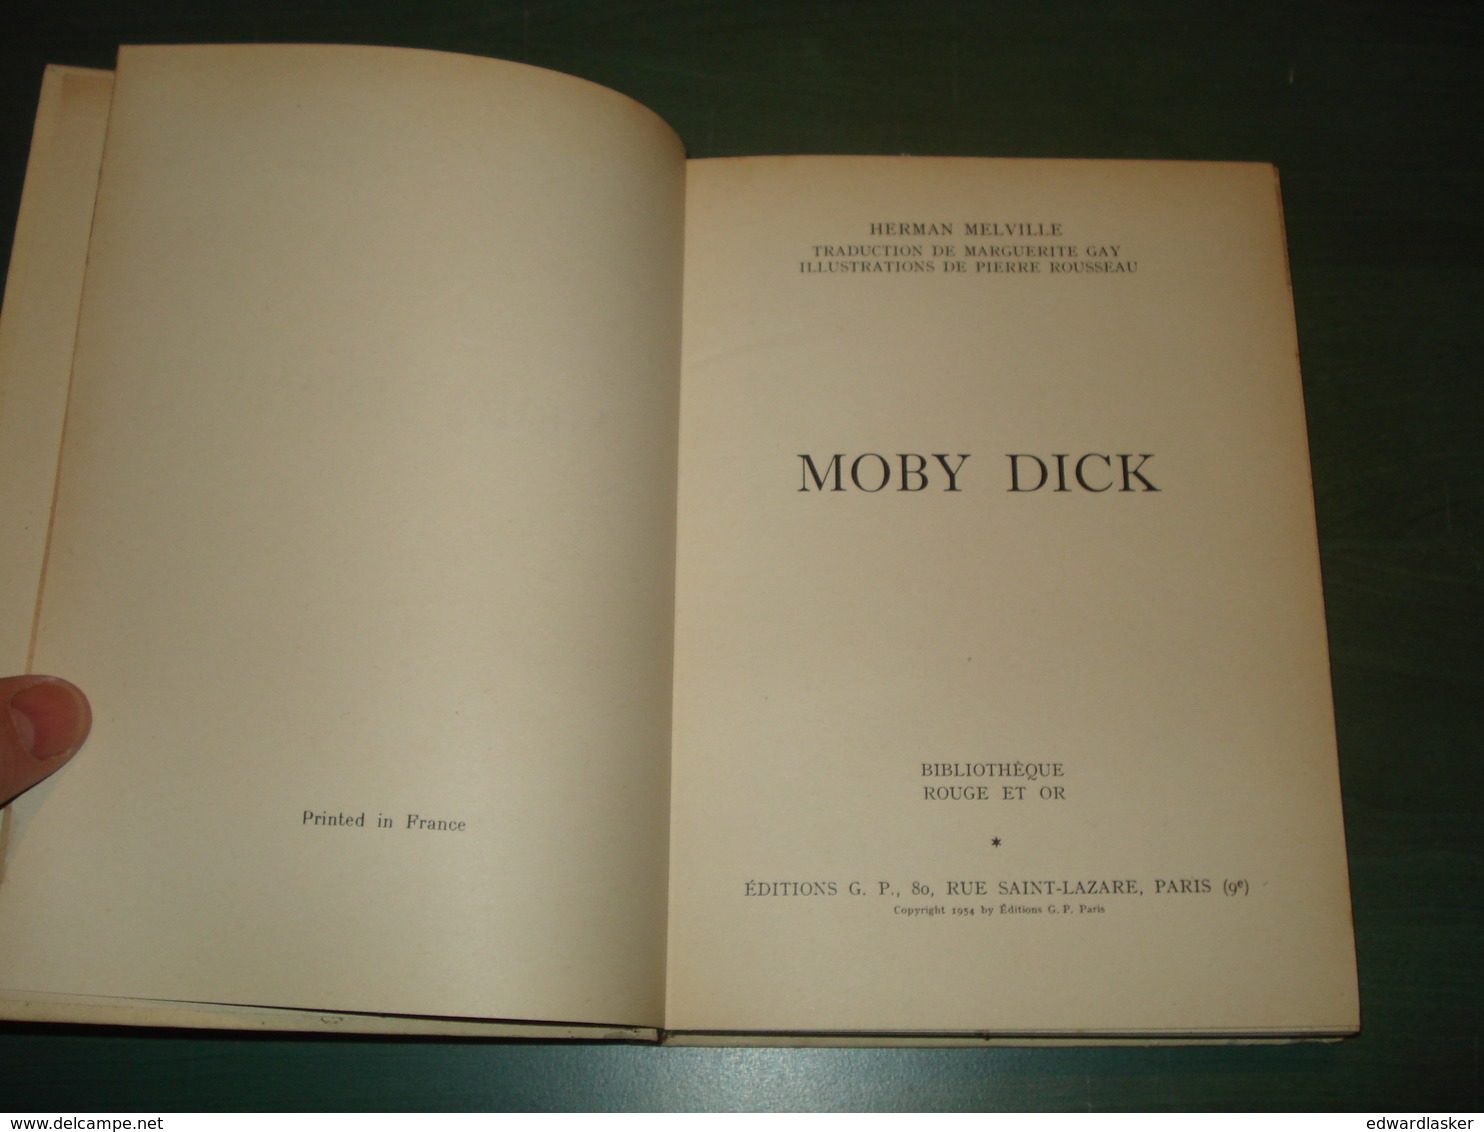 Bibl. ROUGE ET OR n°72 : MOBY DICK //Herman Melville - 1954 - Pierre Rousseau